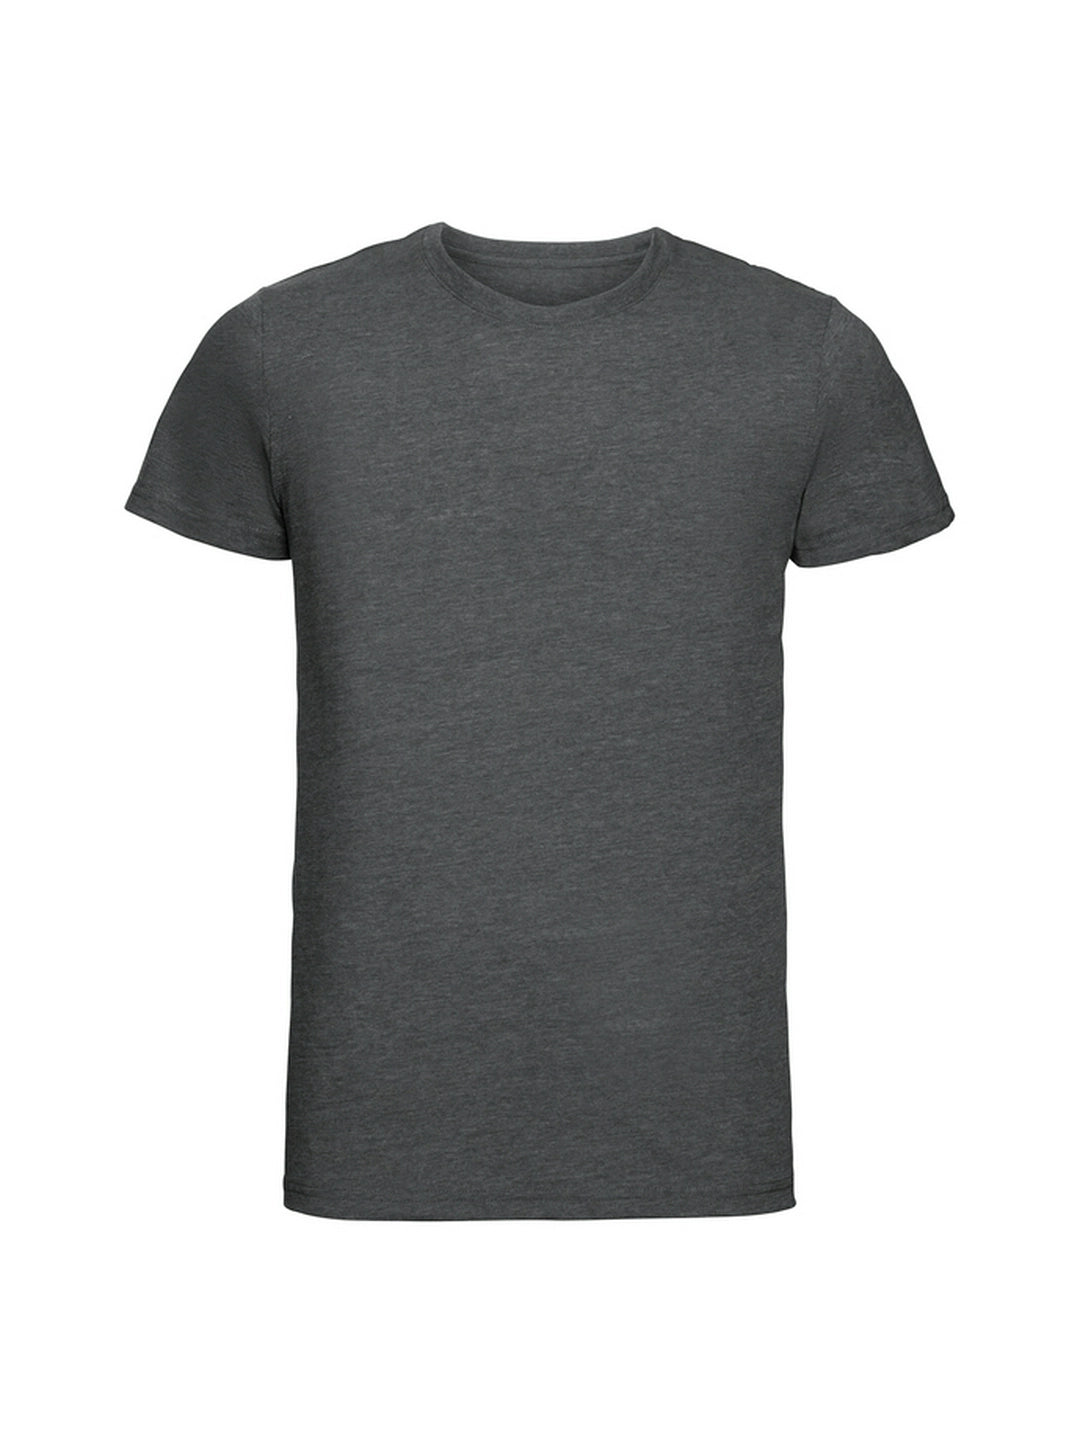 HD T-Shirt 160gsm Adult - COOZO